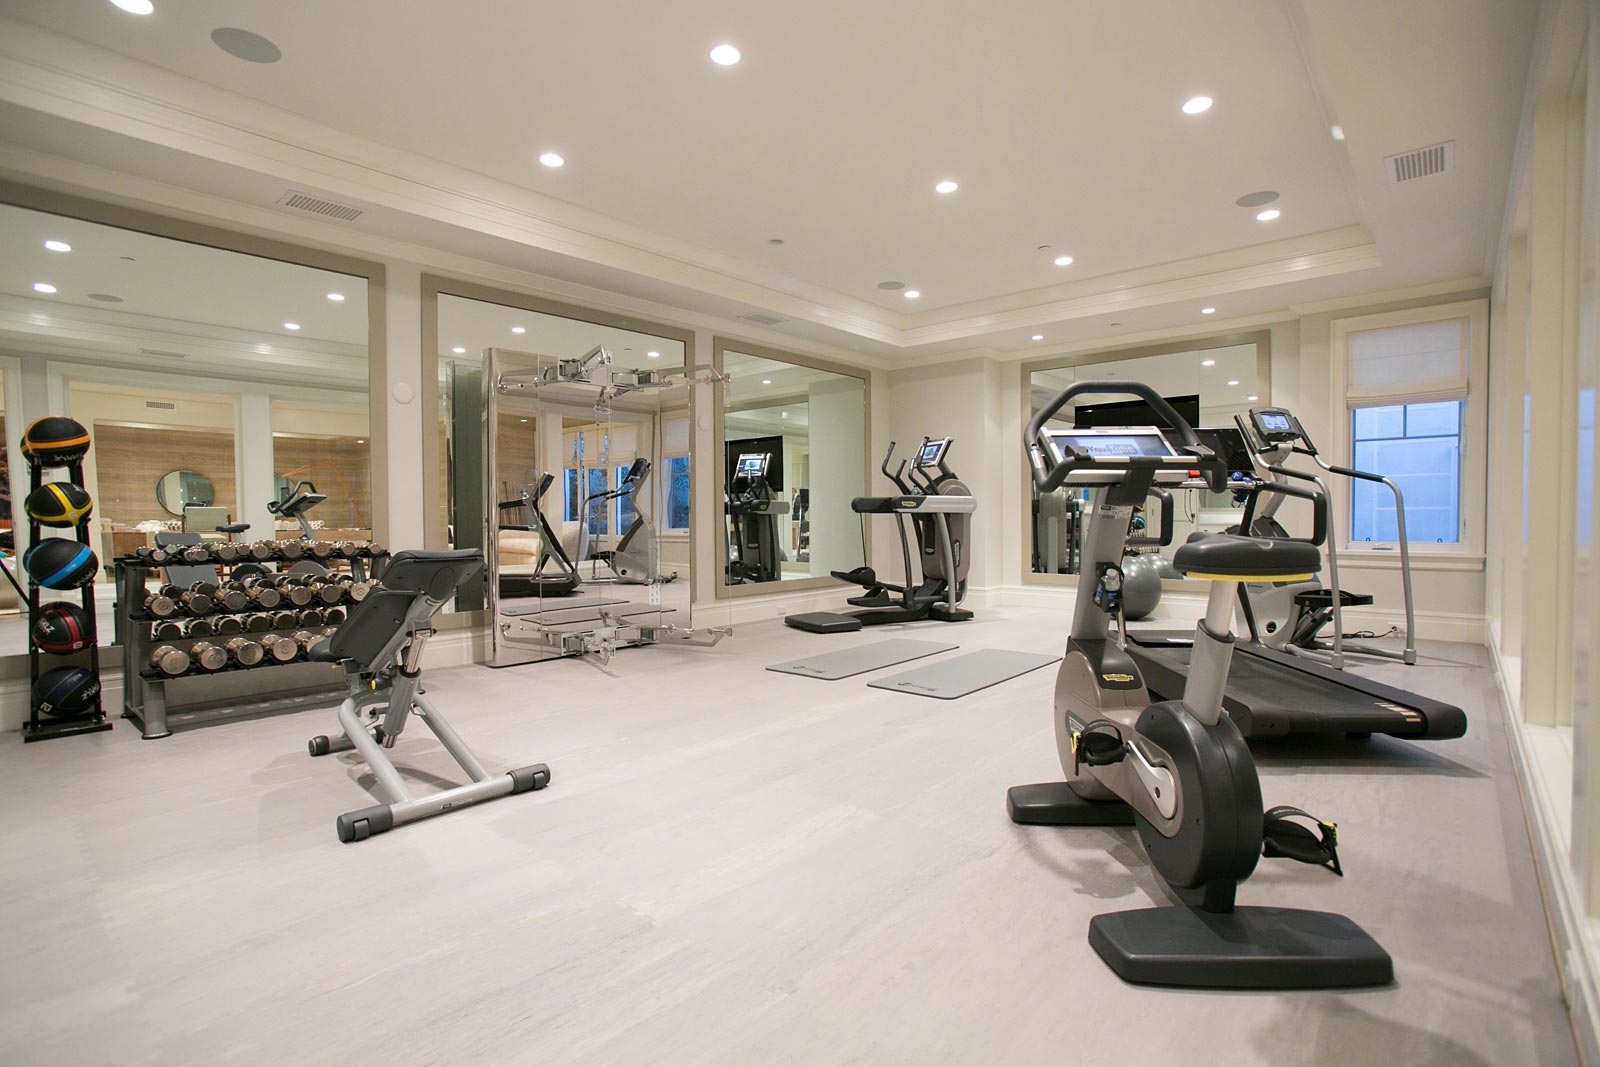 home-gym-design-fitness-design-group-technogym-kinesis-los-angeles-gym-flooring-ecore-cardio-treadmill